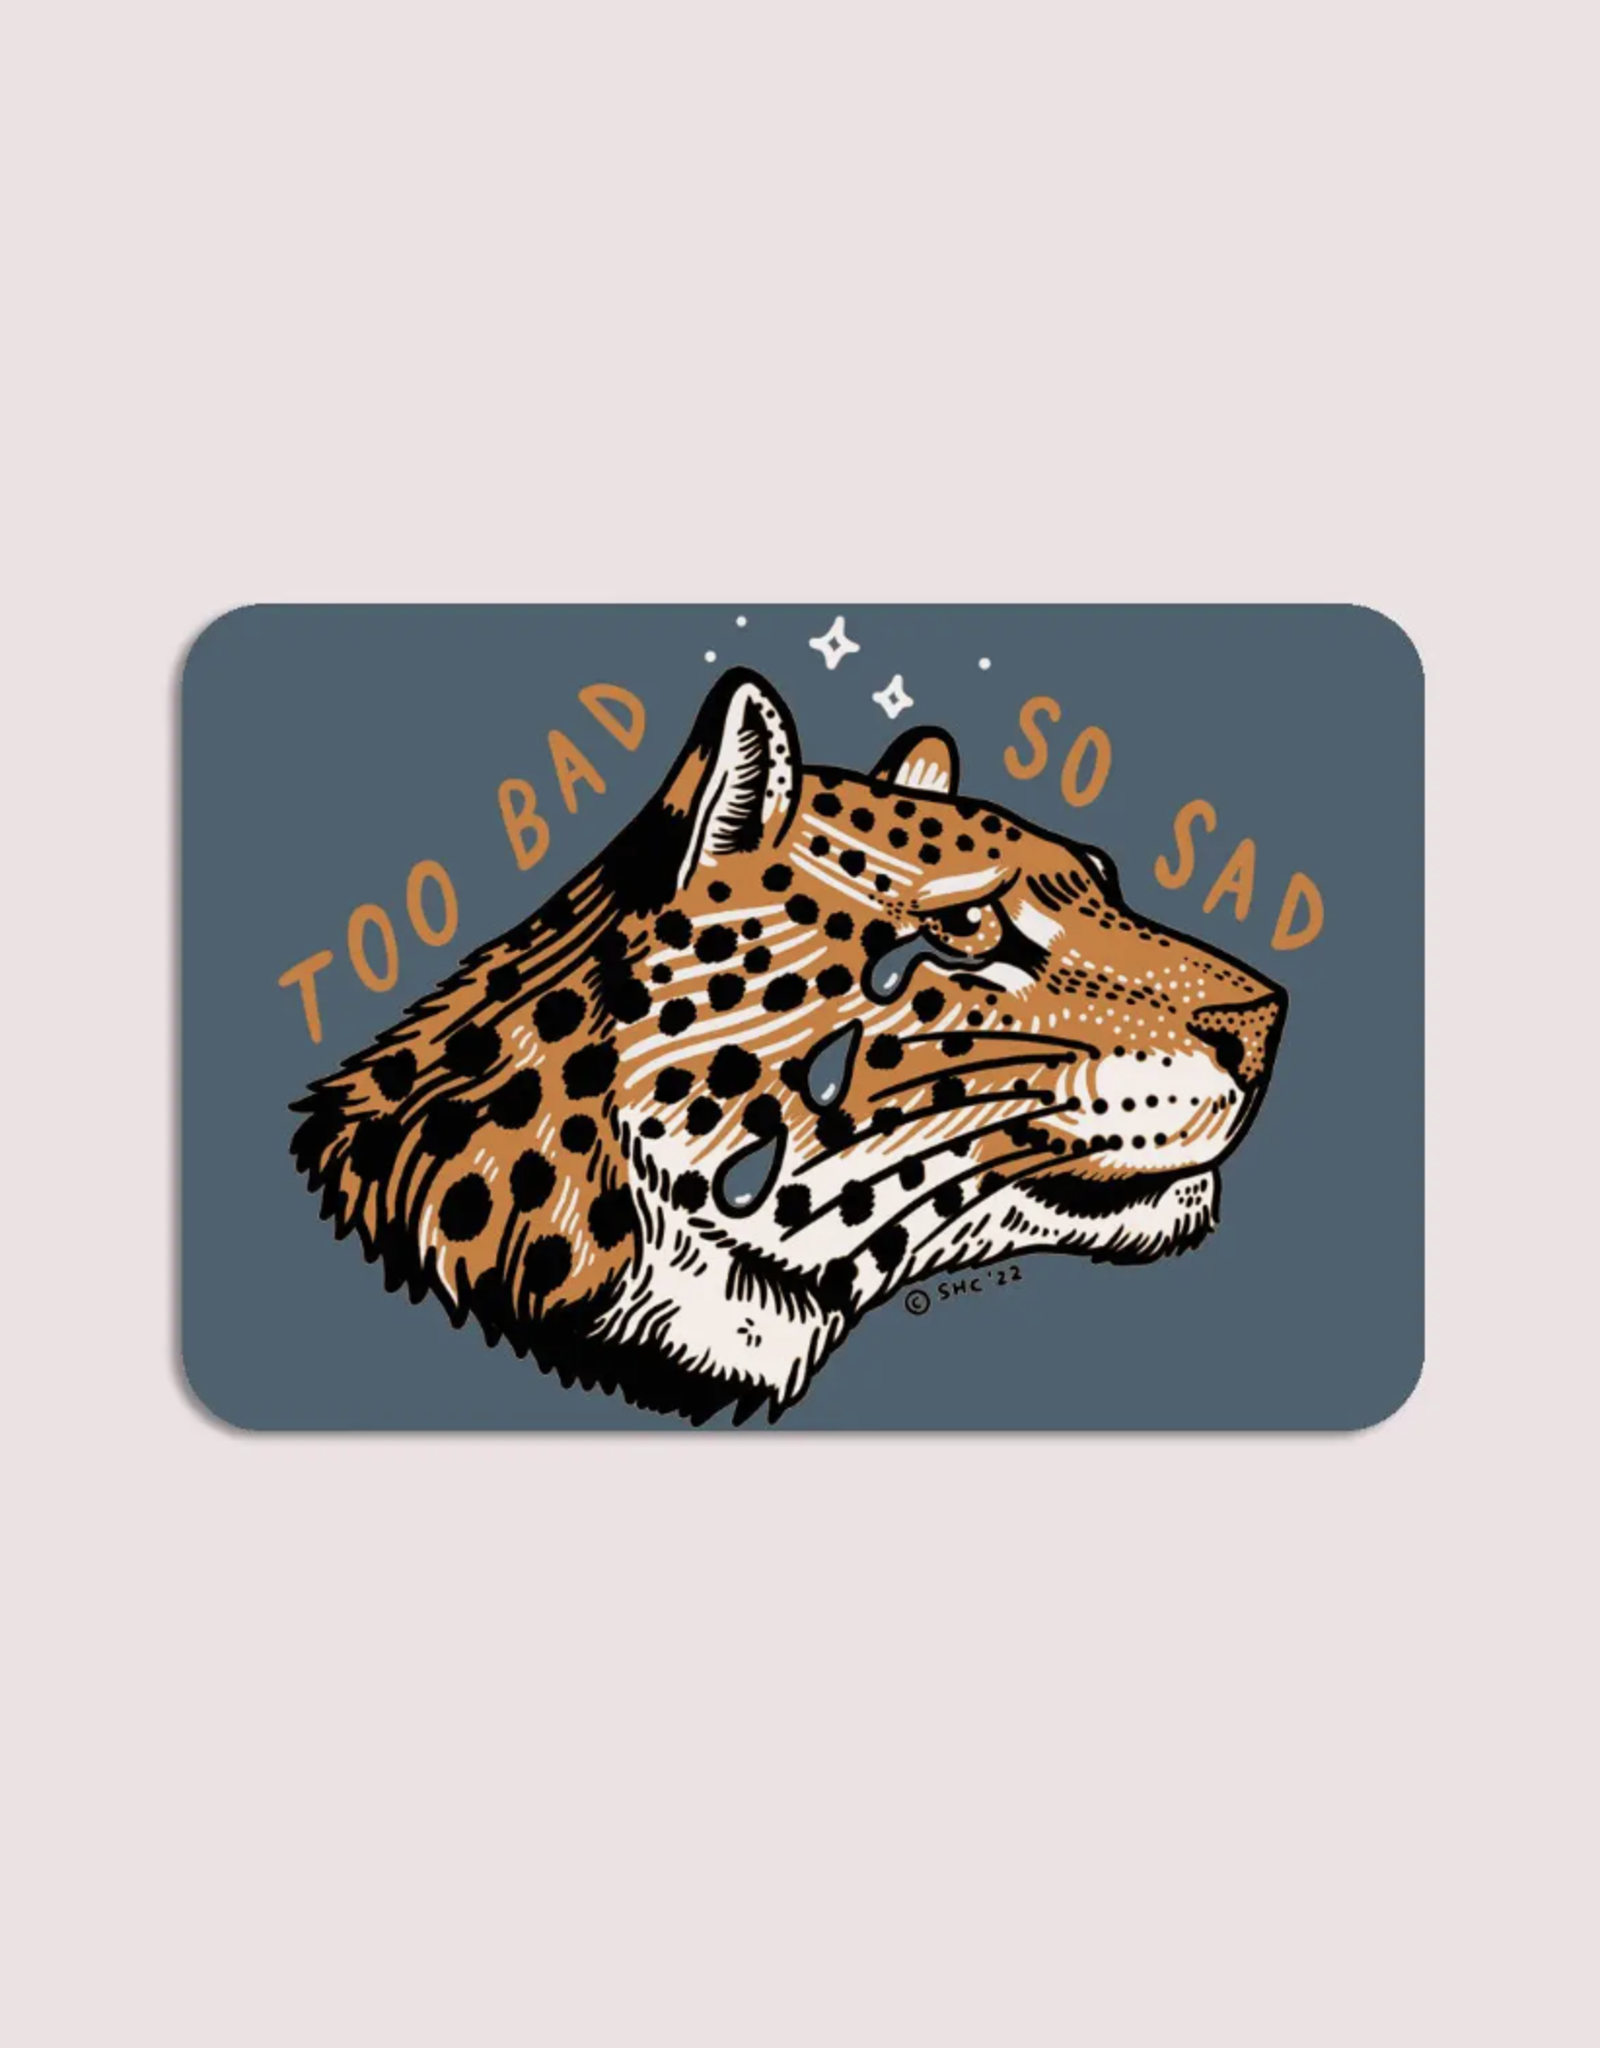 Too Bad So Sad Leopard Vinyl Sticker